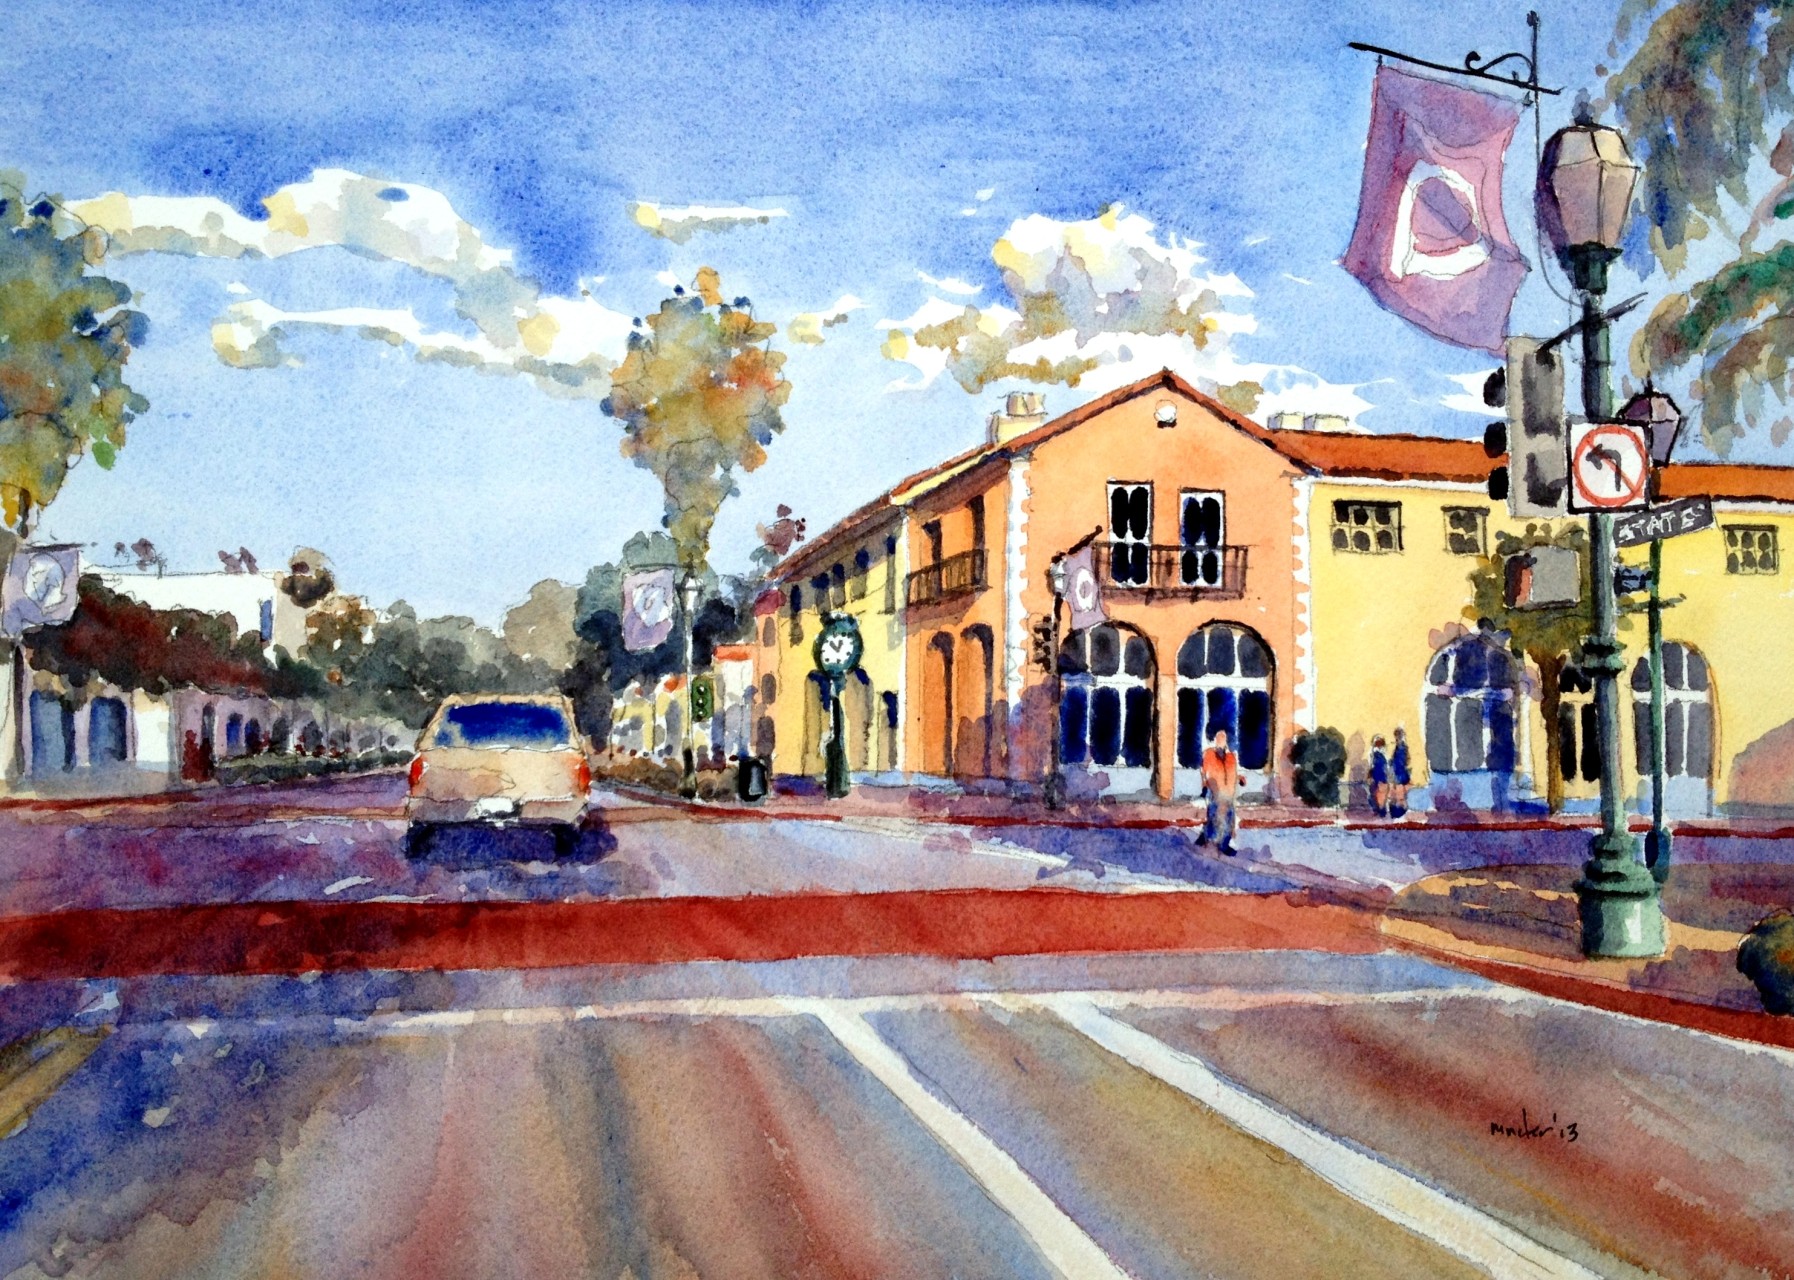 State Street Santa Barbara